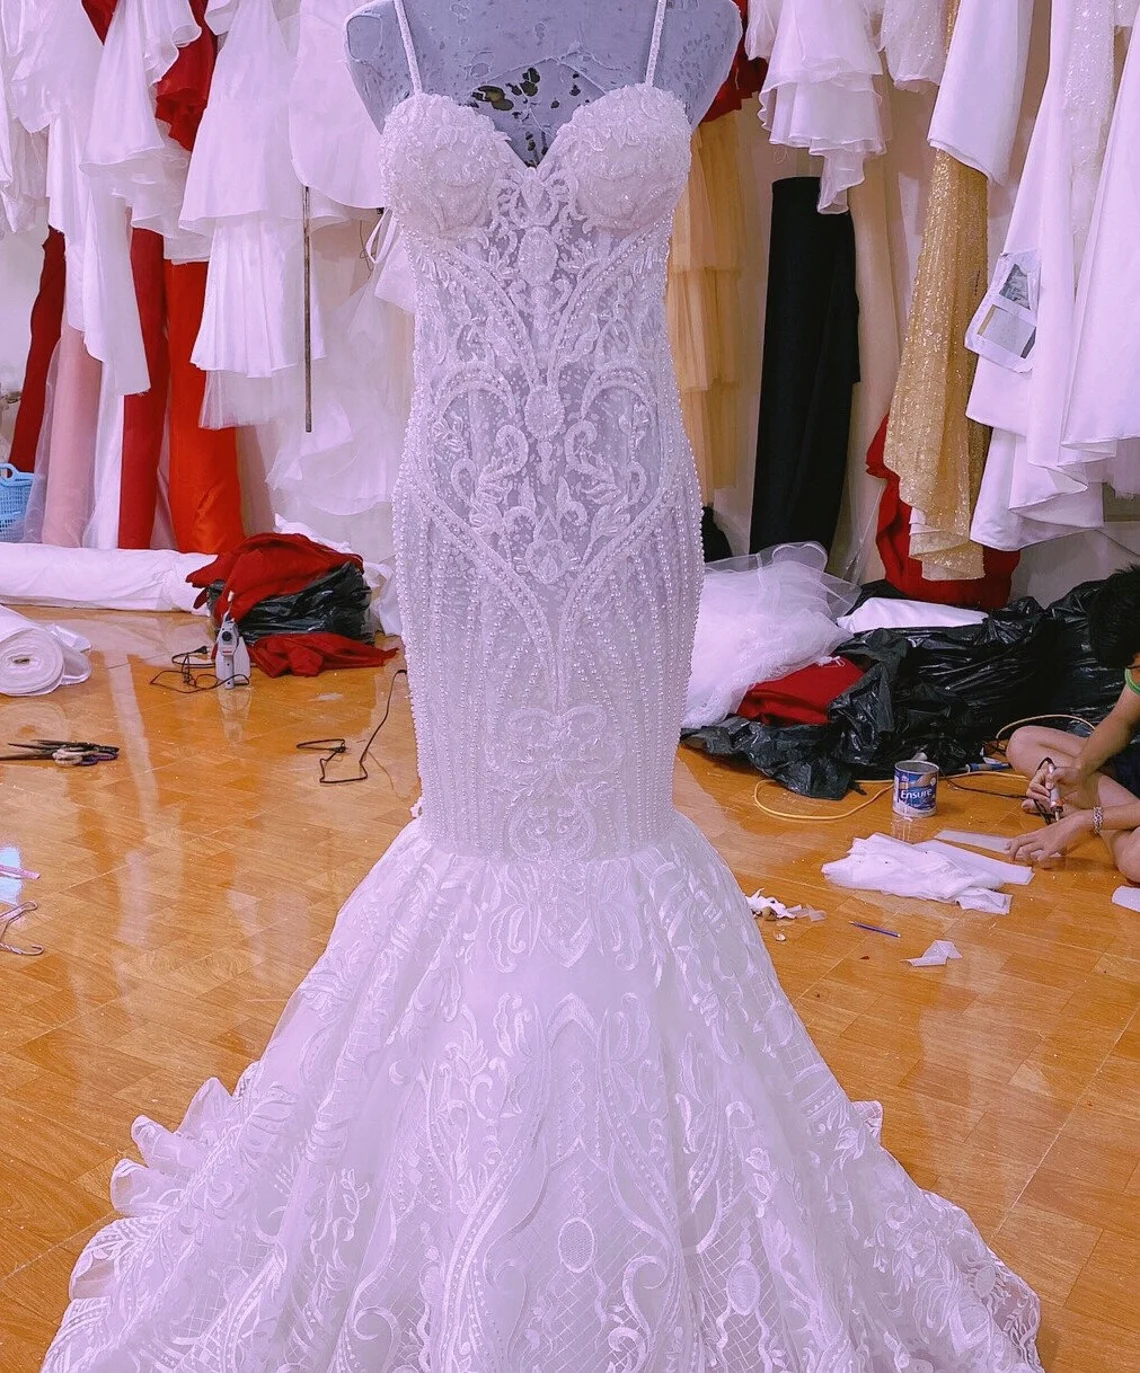 GLAMOROUS wedding dress,DS4643